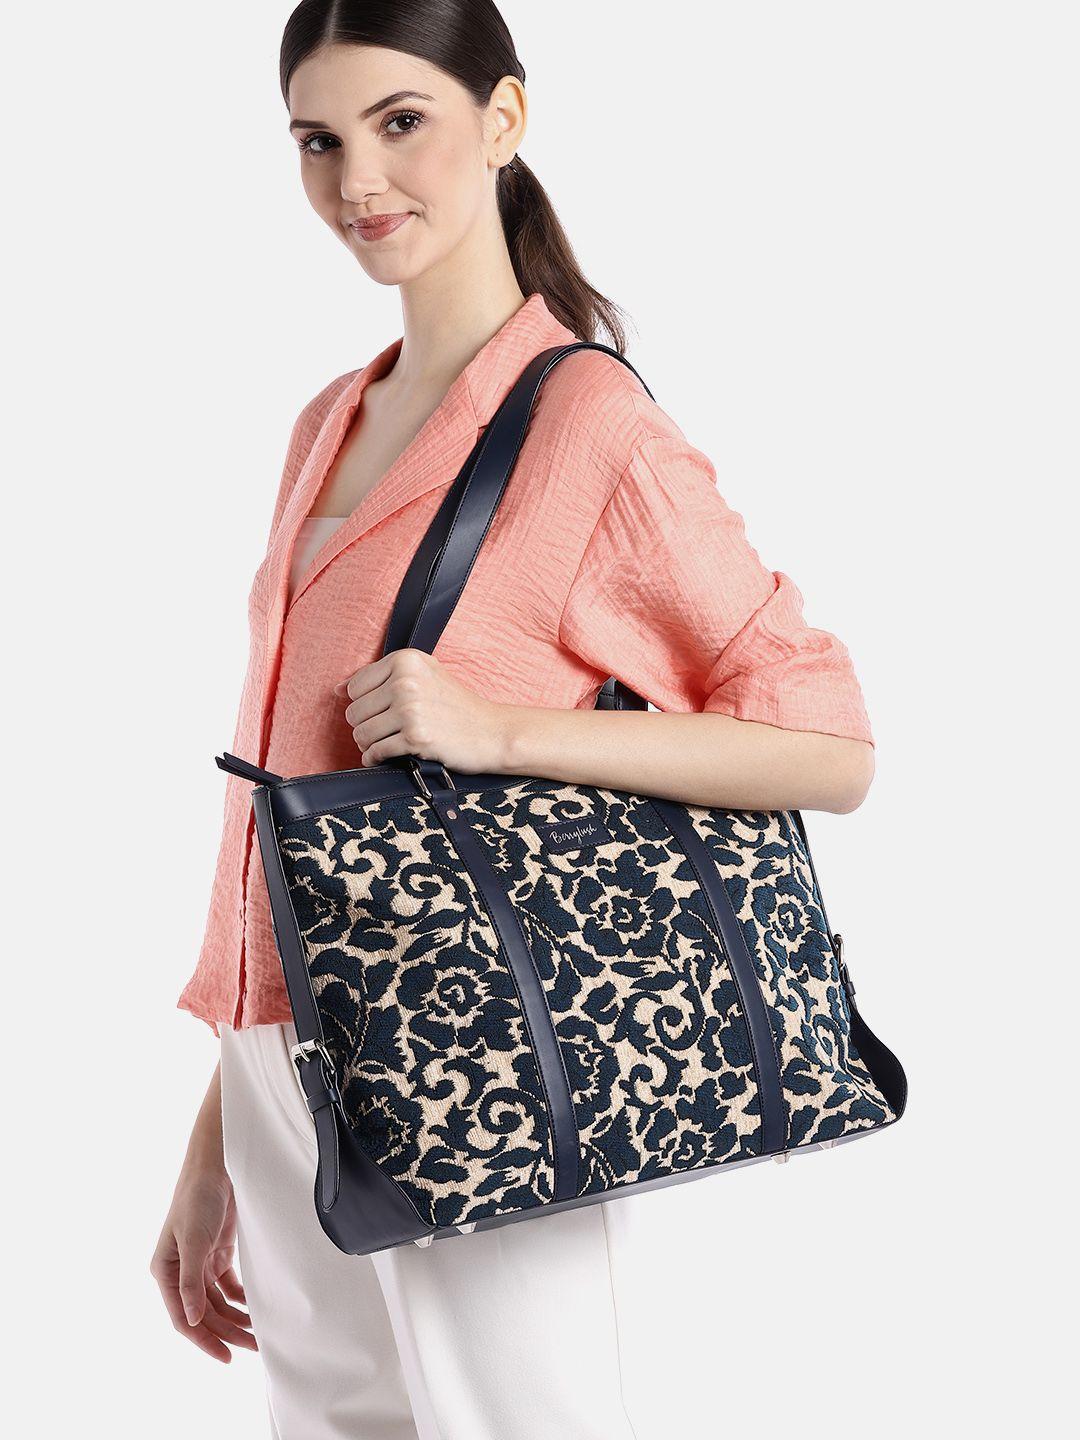 berrylush women white & blue floral embroidered shoulder laptop bag